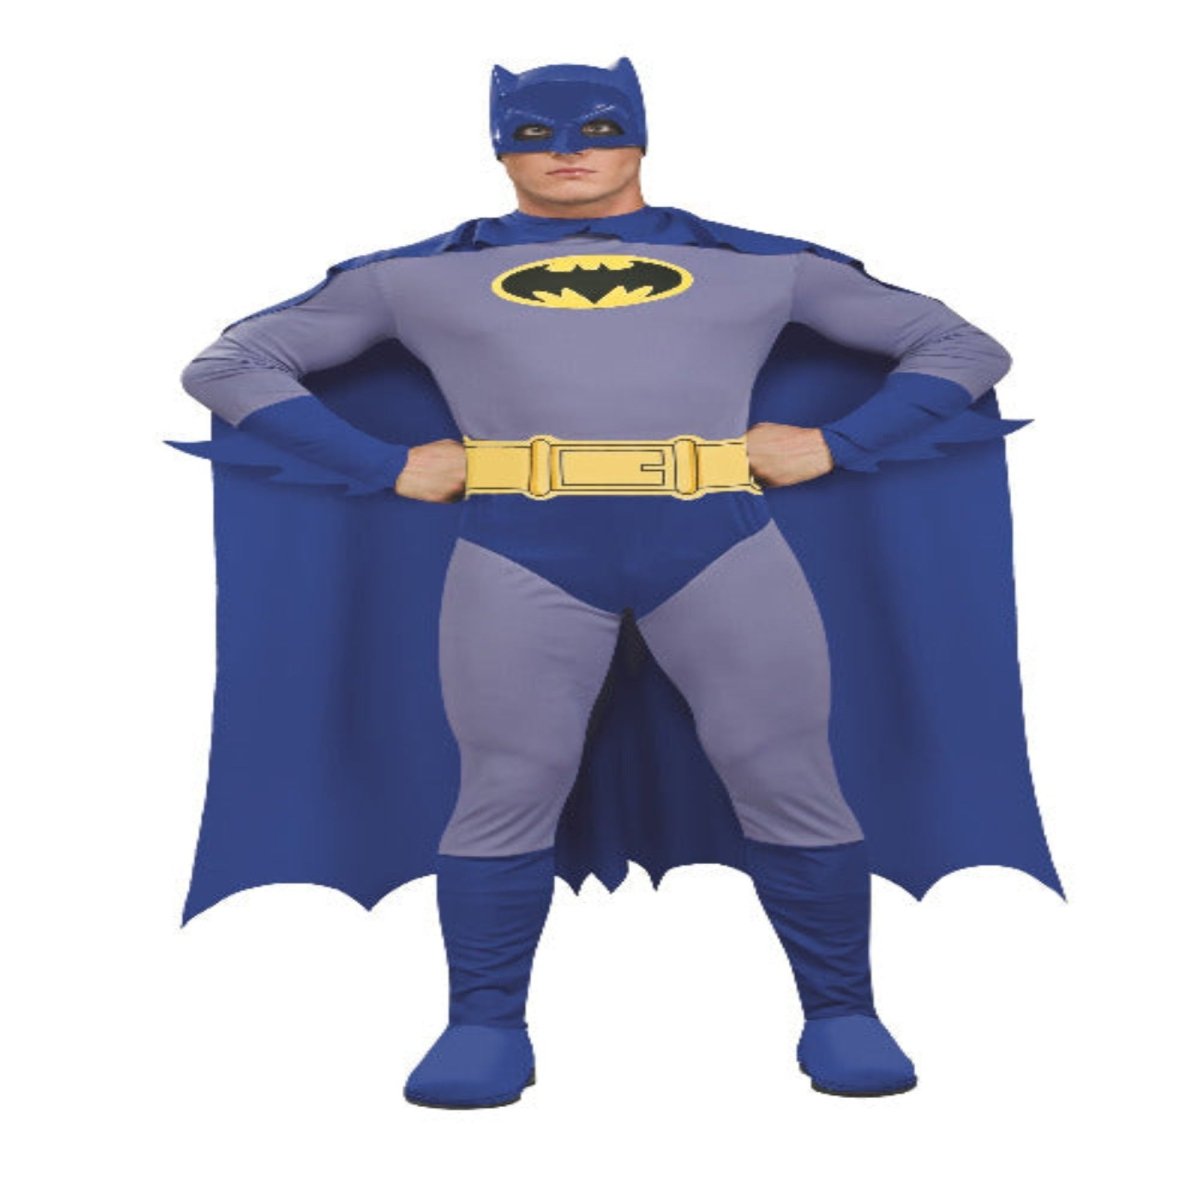 Adult Batman Costume - Brave and the Bold - worldclasscostumes